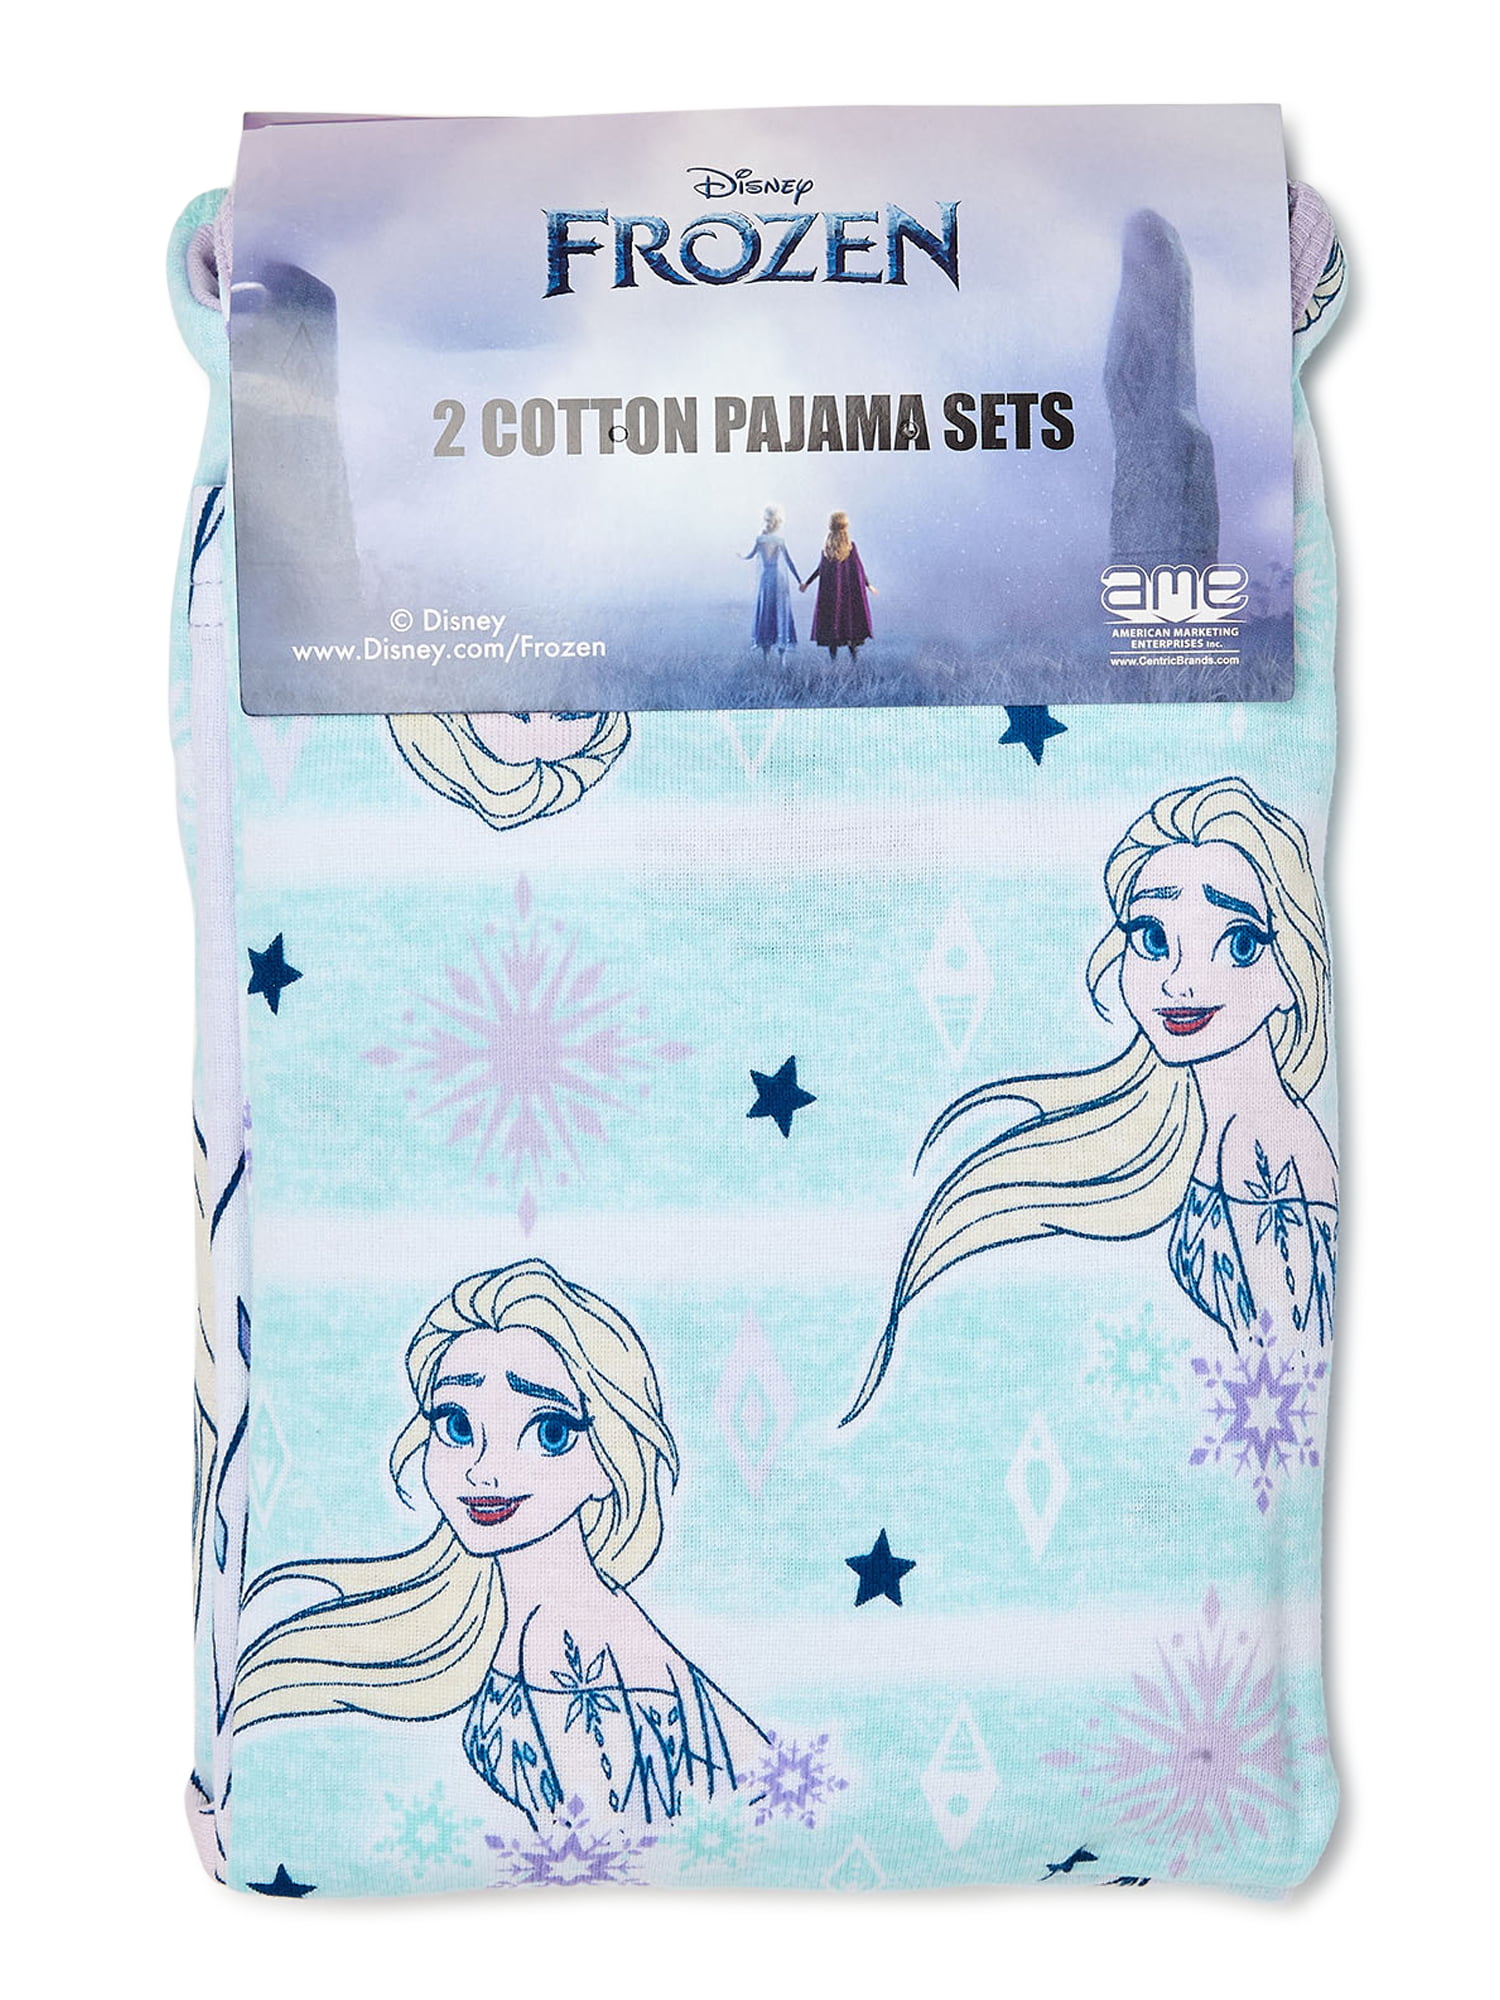 Includes Top and Bottom American Marketing Enterprises Frozen 2 Pajama Set for Girls Frozen 2 